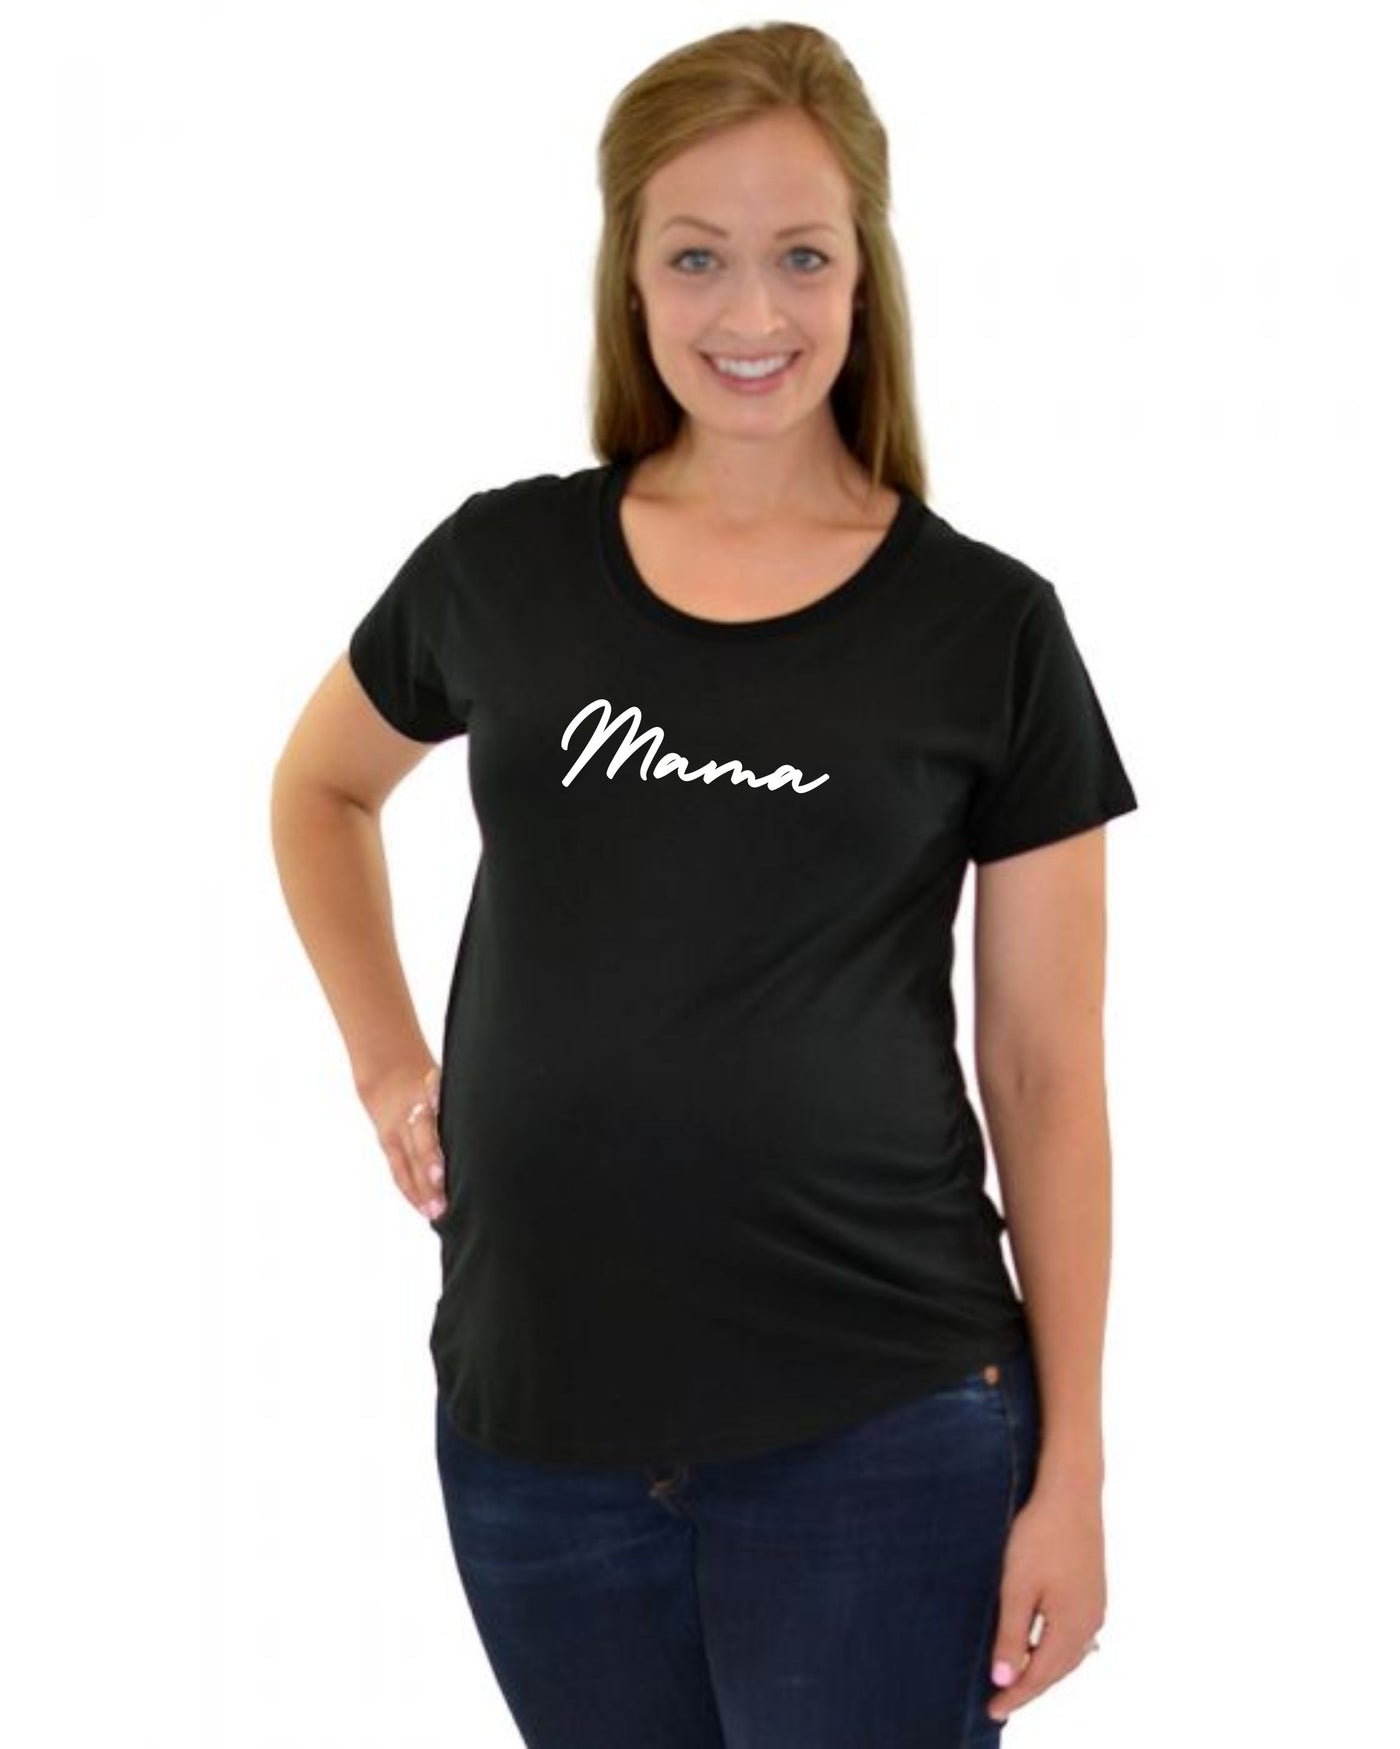 "Mama" Maternity T-Shirt